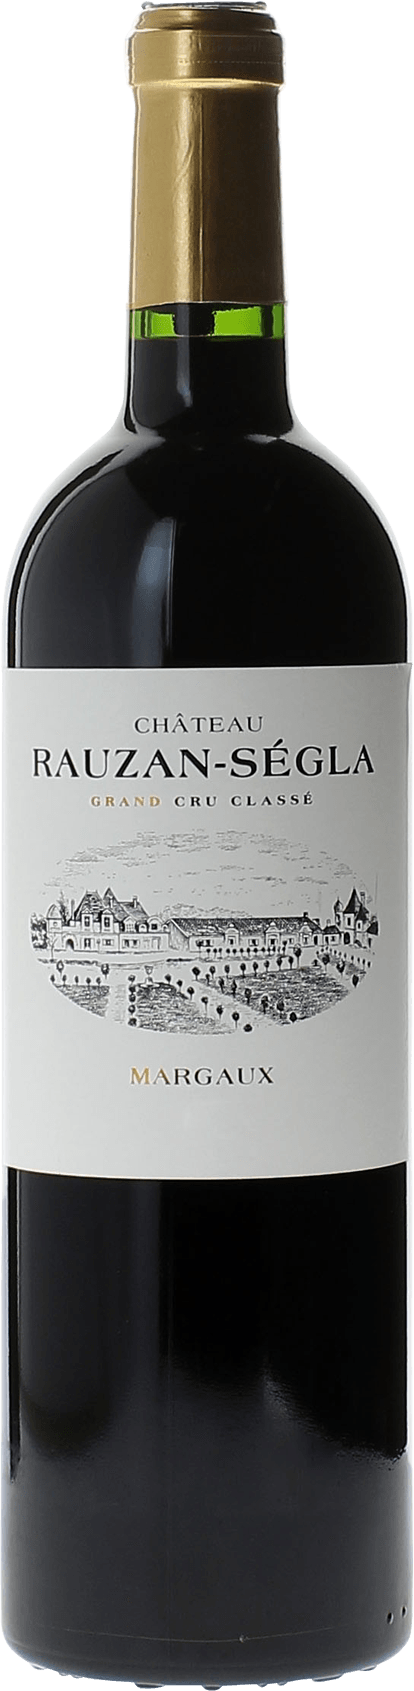 Rauzan-segla 1992 2me Grand cru class Margaux, Bordeaux rouge